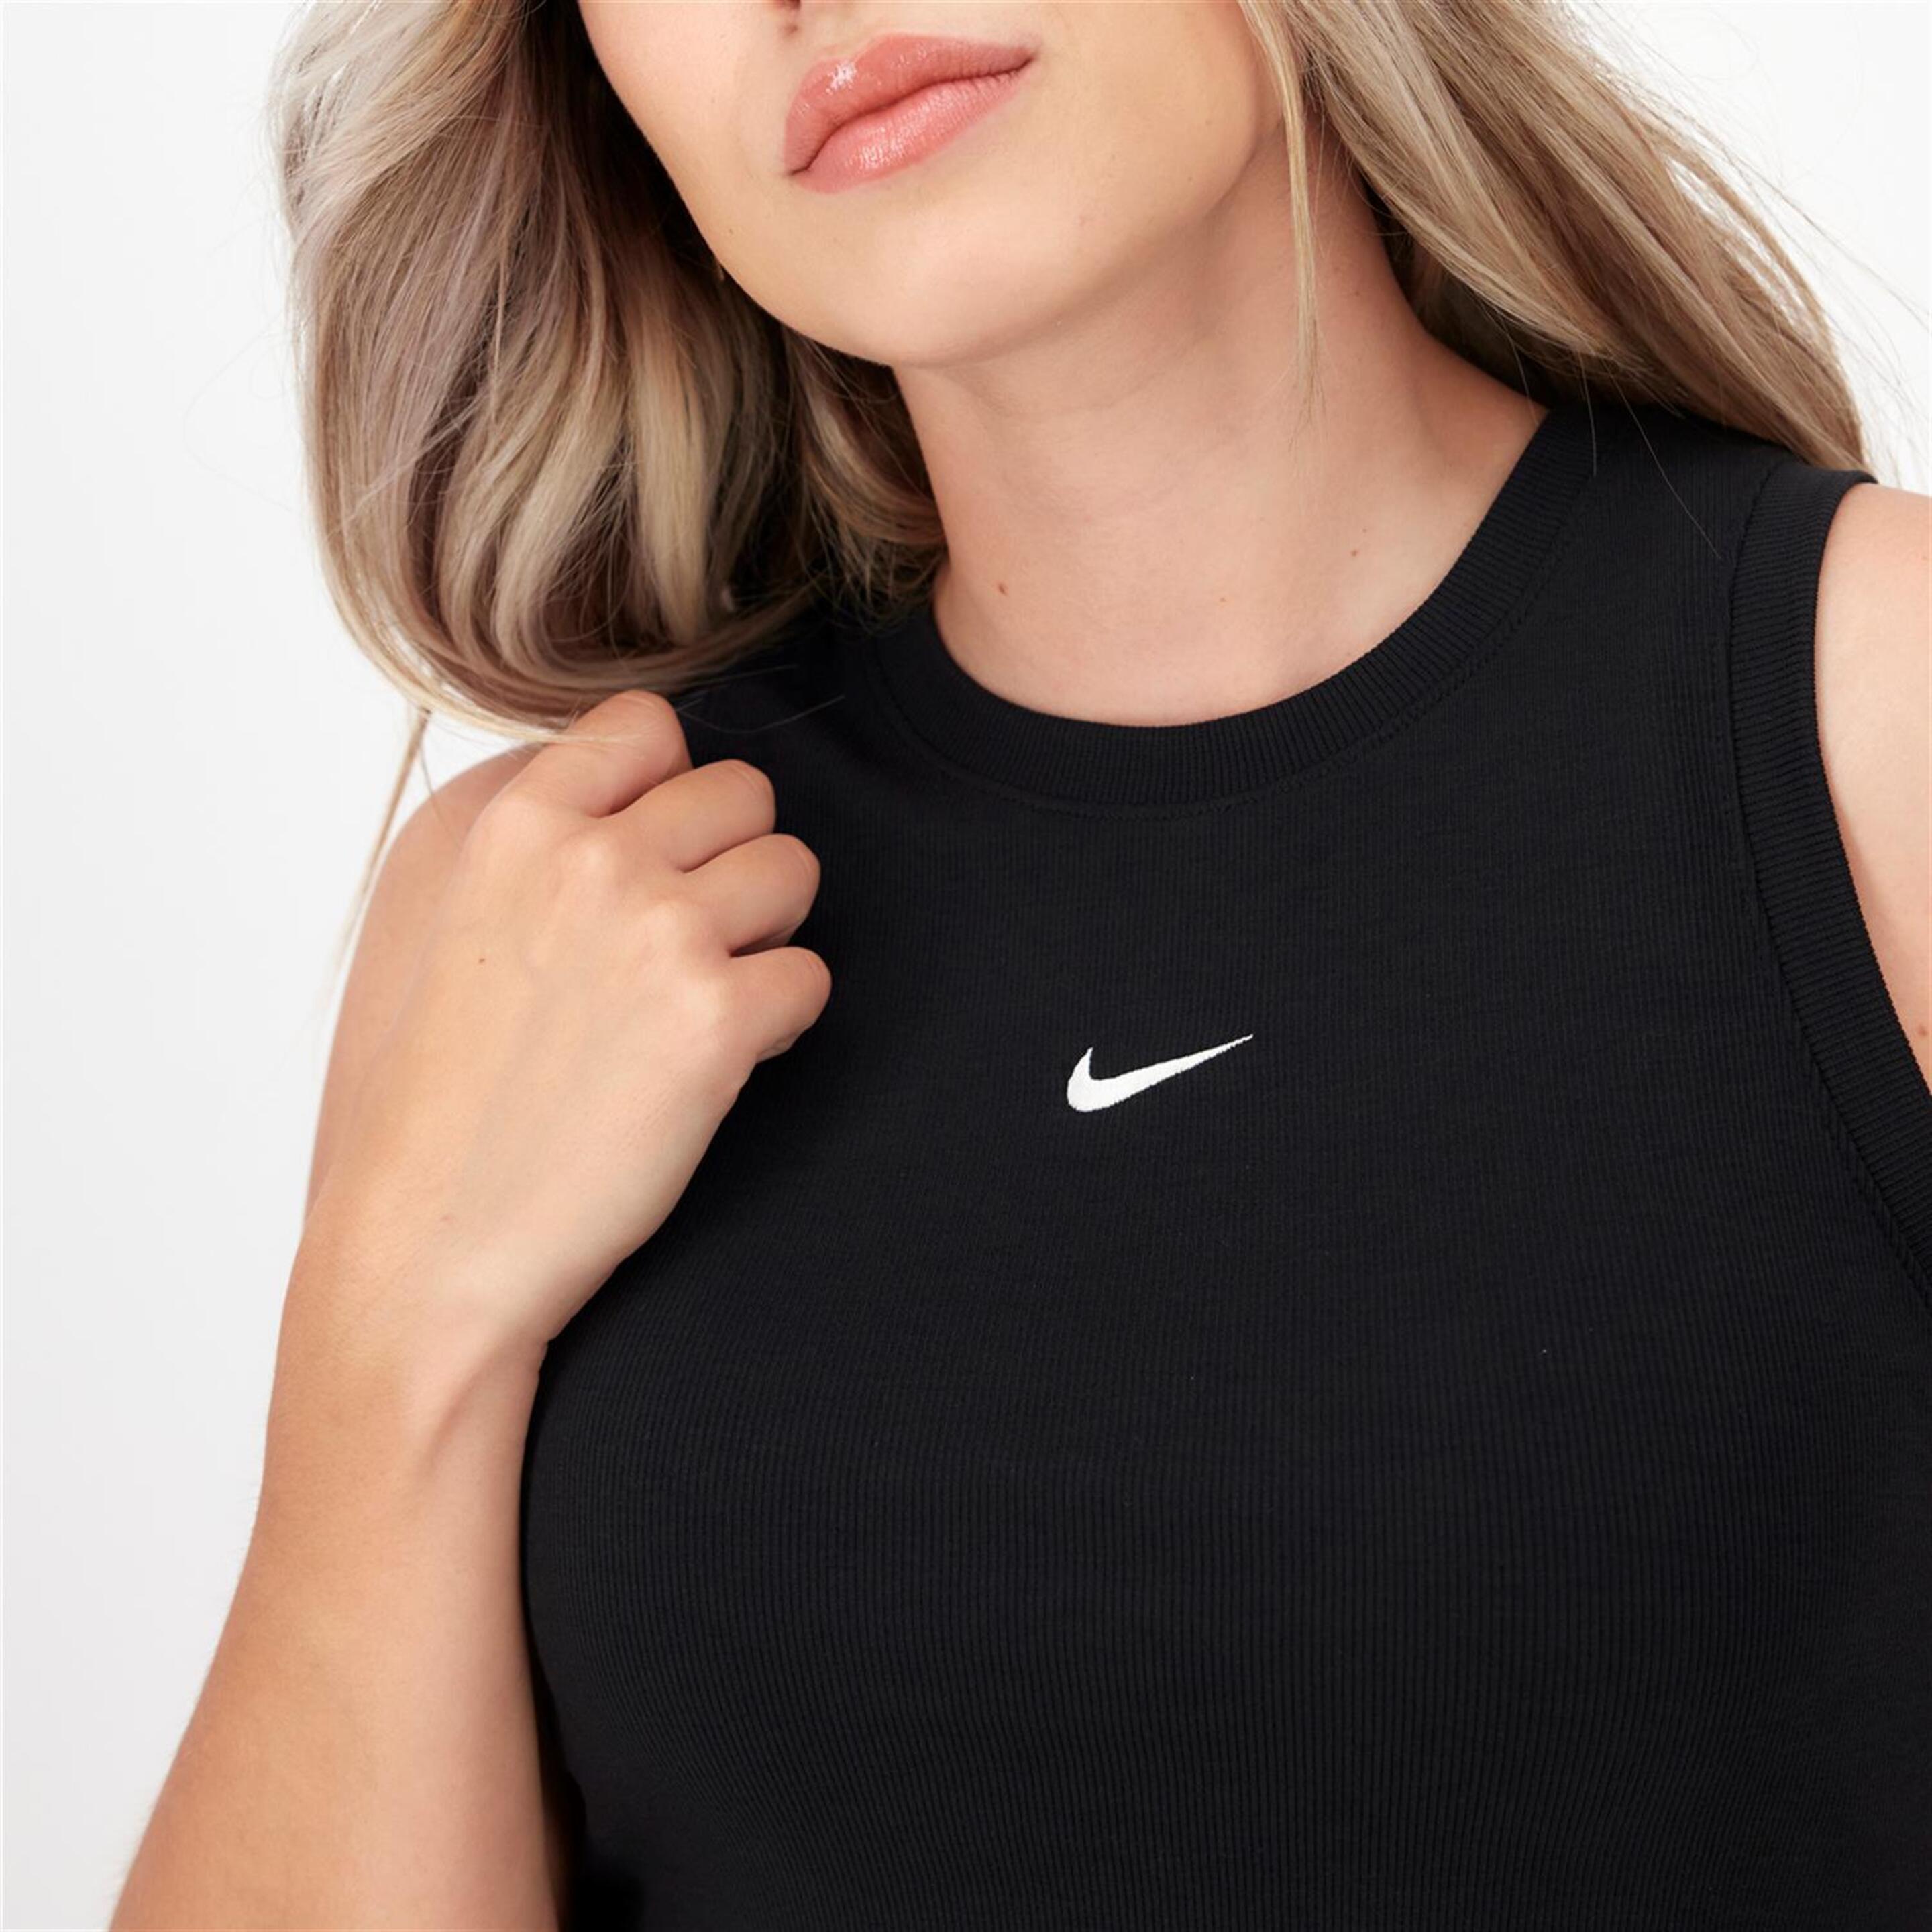 Camiseta Nike - Negro - Crop Top Mujer